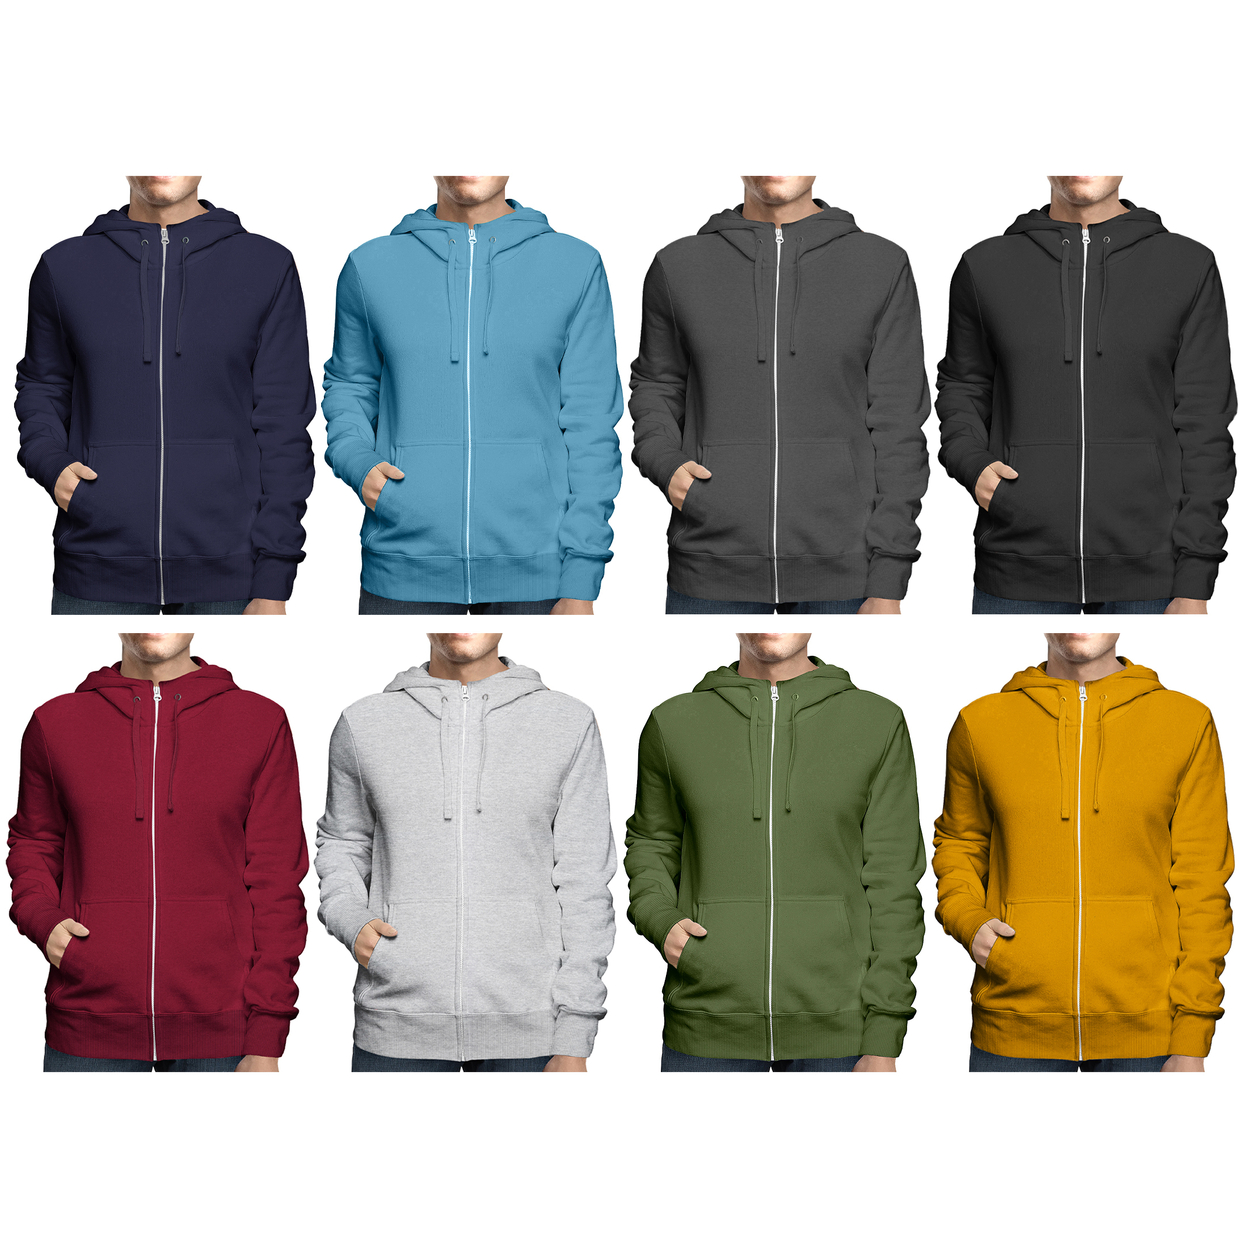 Multi-Pack: Men's Premium Soft Cozy Full Zip-Up Fleece Lined Hoodie Sweatshirt - 2-pack, Small